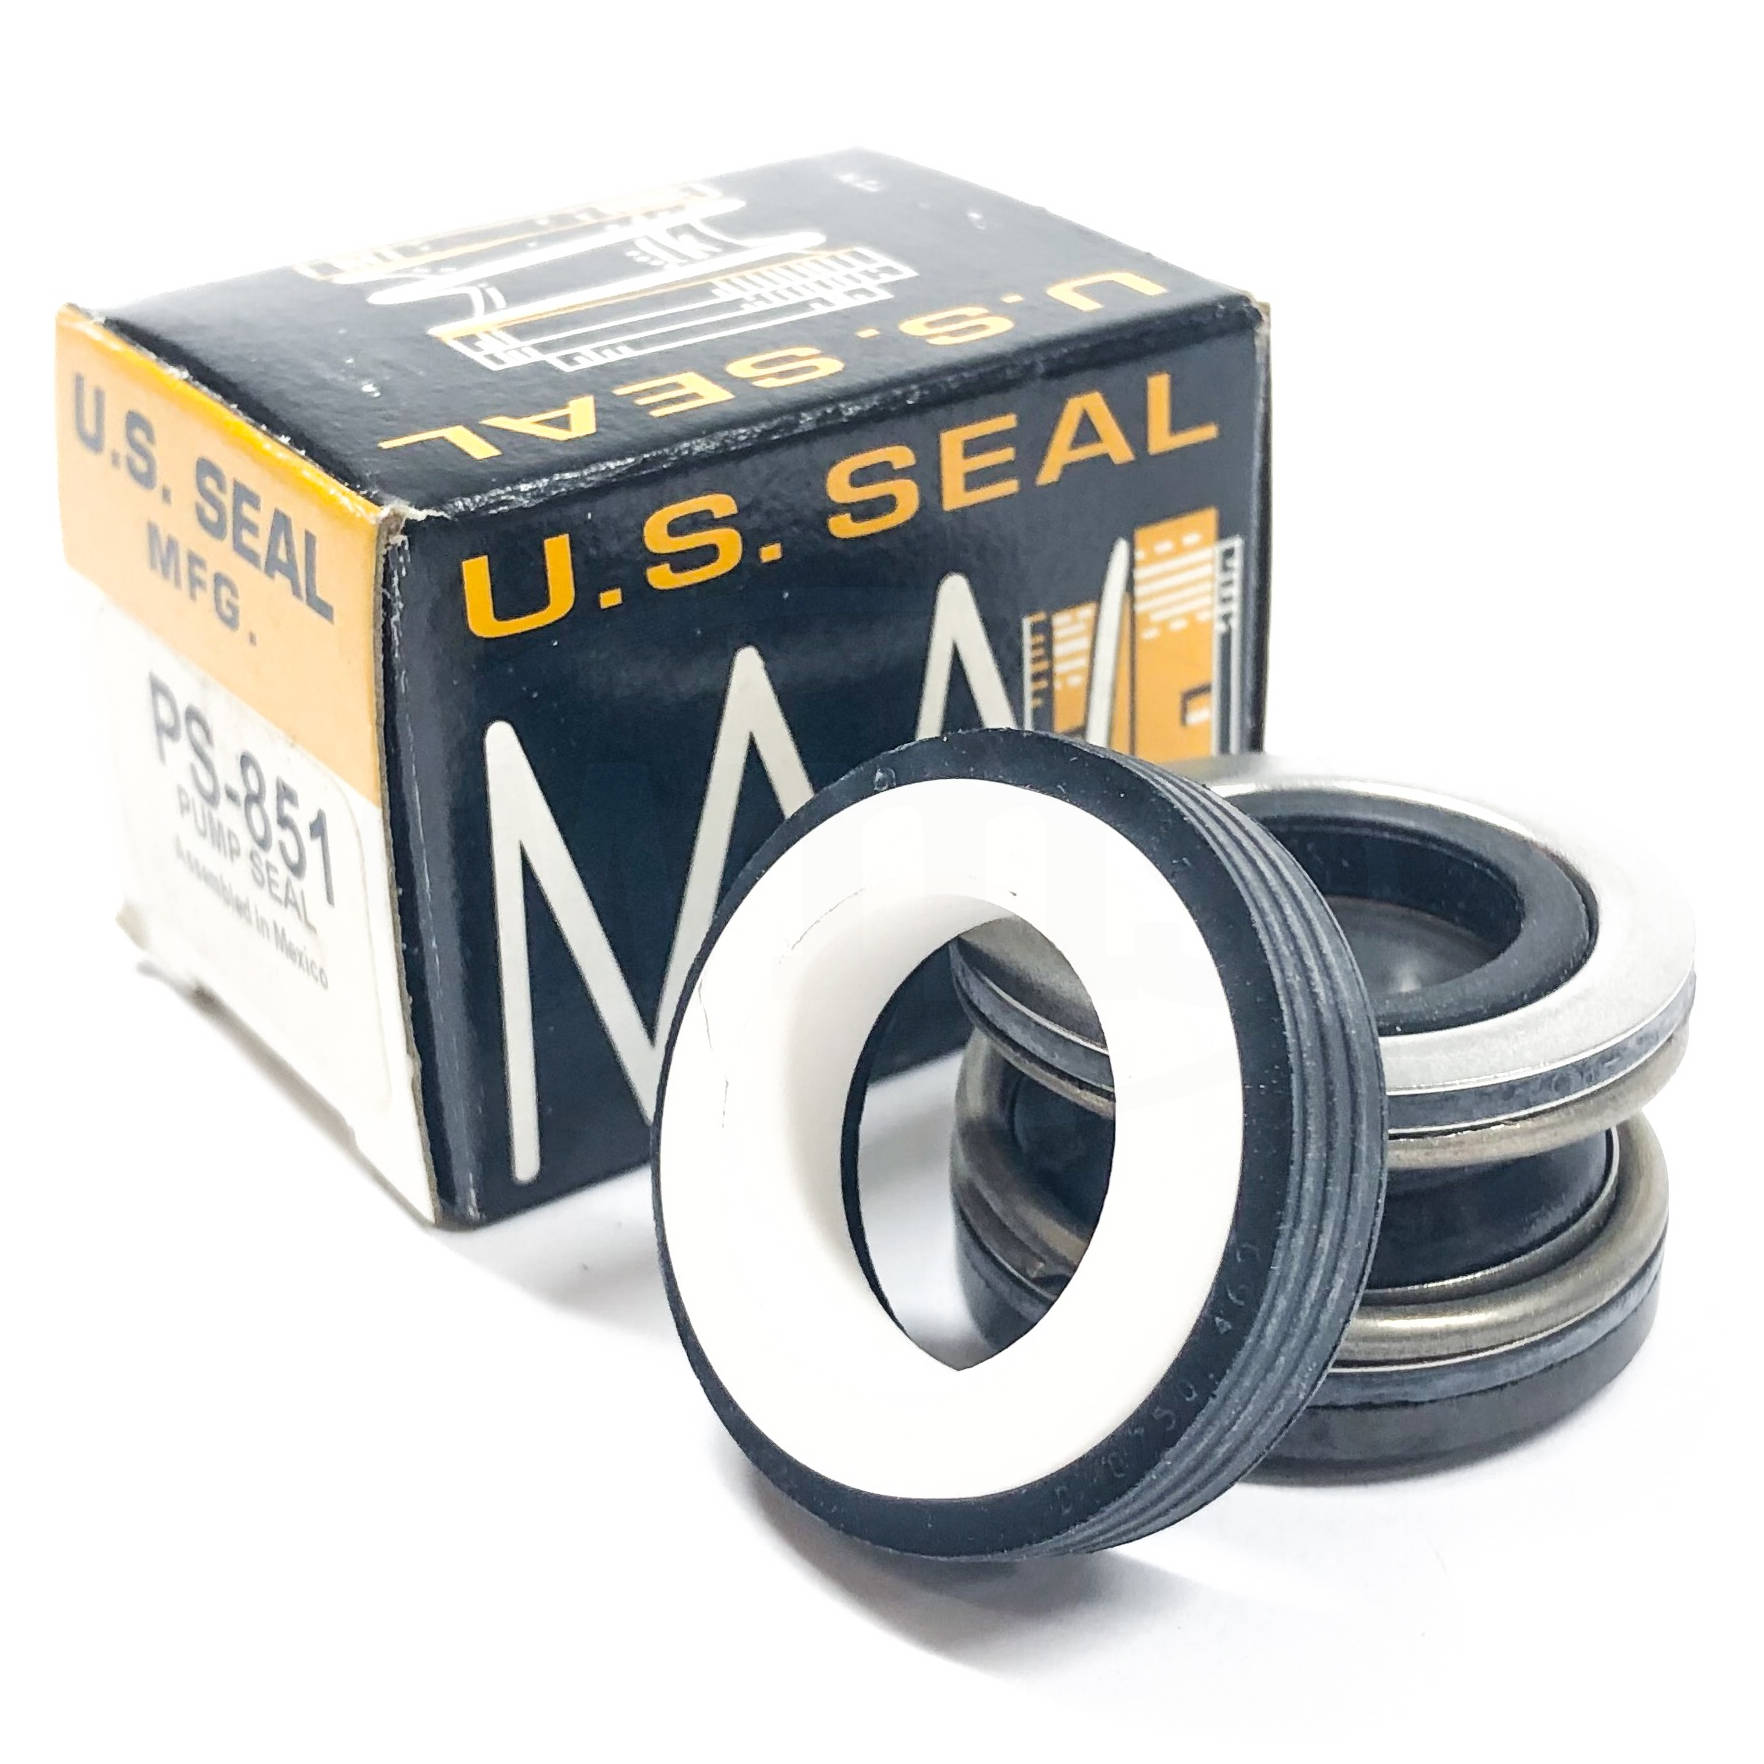 PS-851 U.S.Seal Mfg 3/4' Pump Seal 1